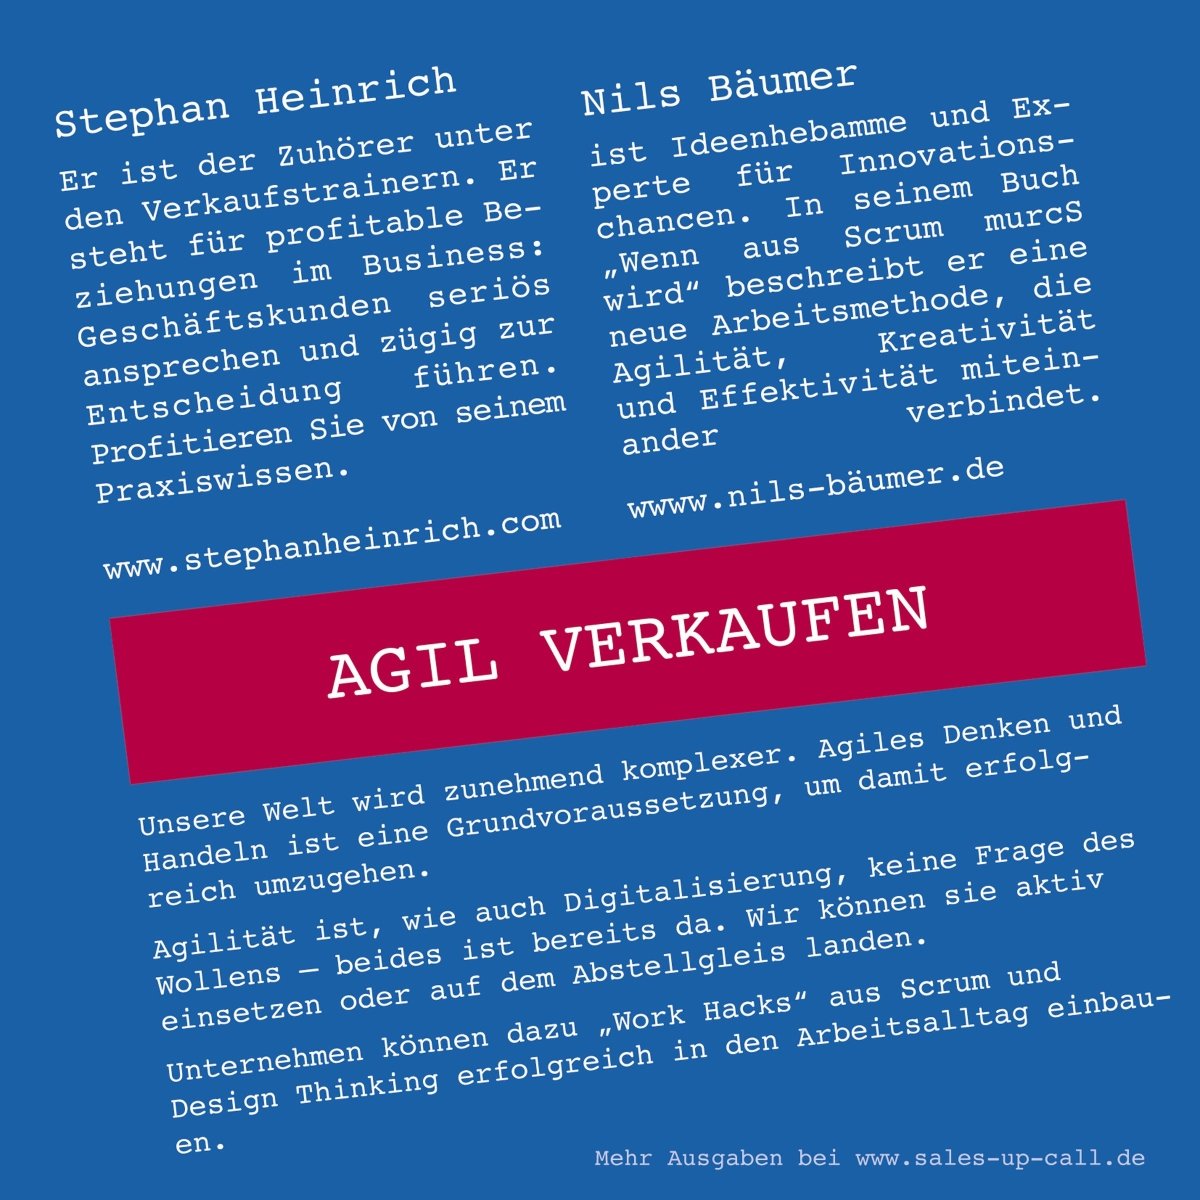 Agil Verkaufen - Sales-up-Call - Stephan Heinrich